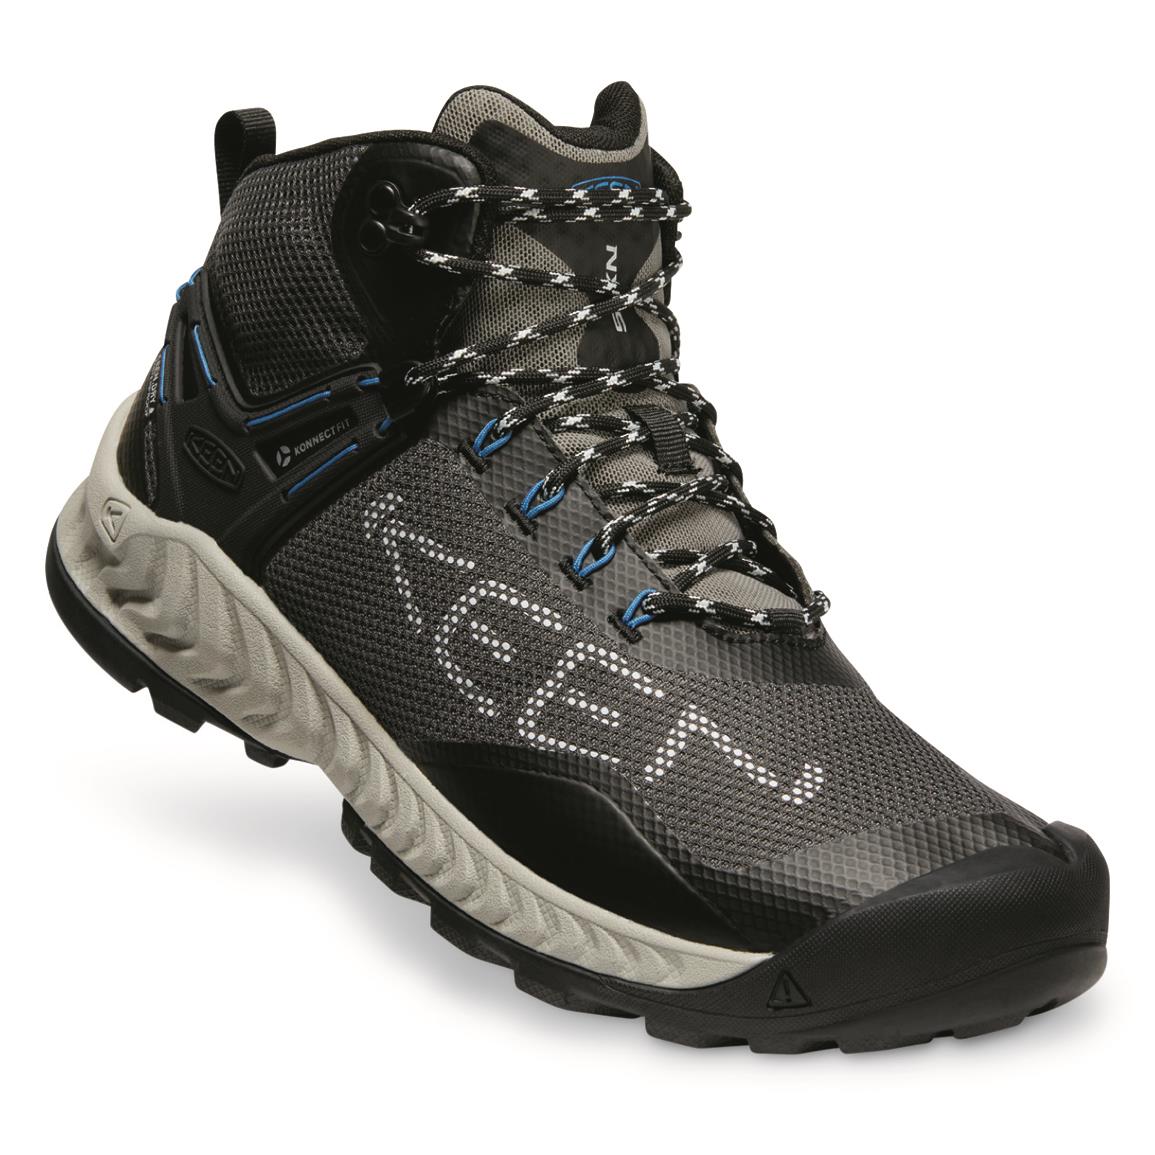 KEEN Men's NXIS EVO Waterproof Hiking Boots., Magnet/bright Cobalt